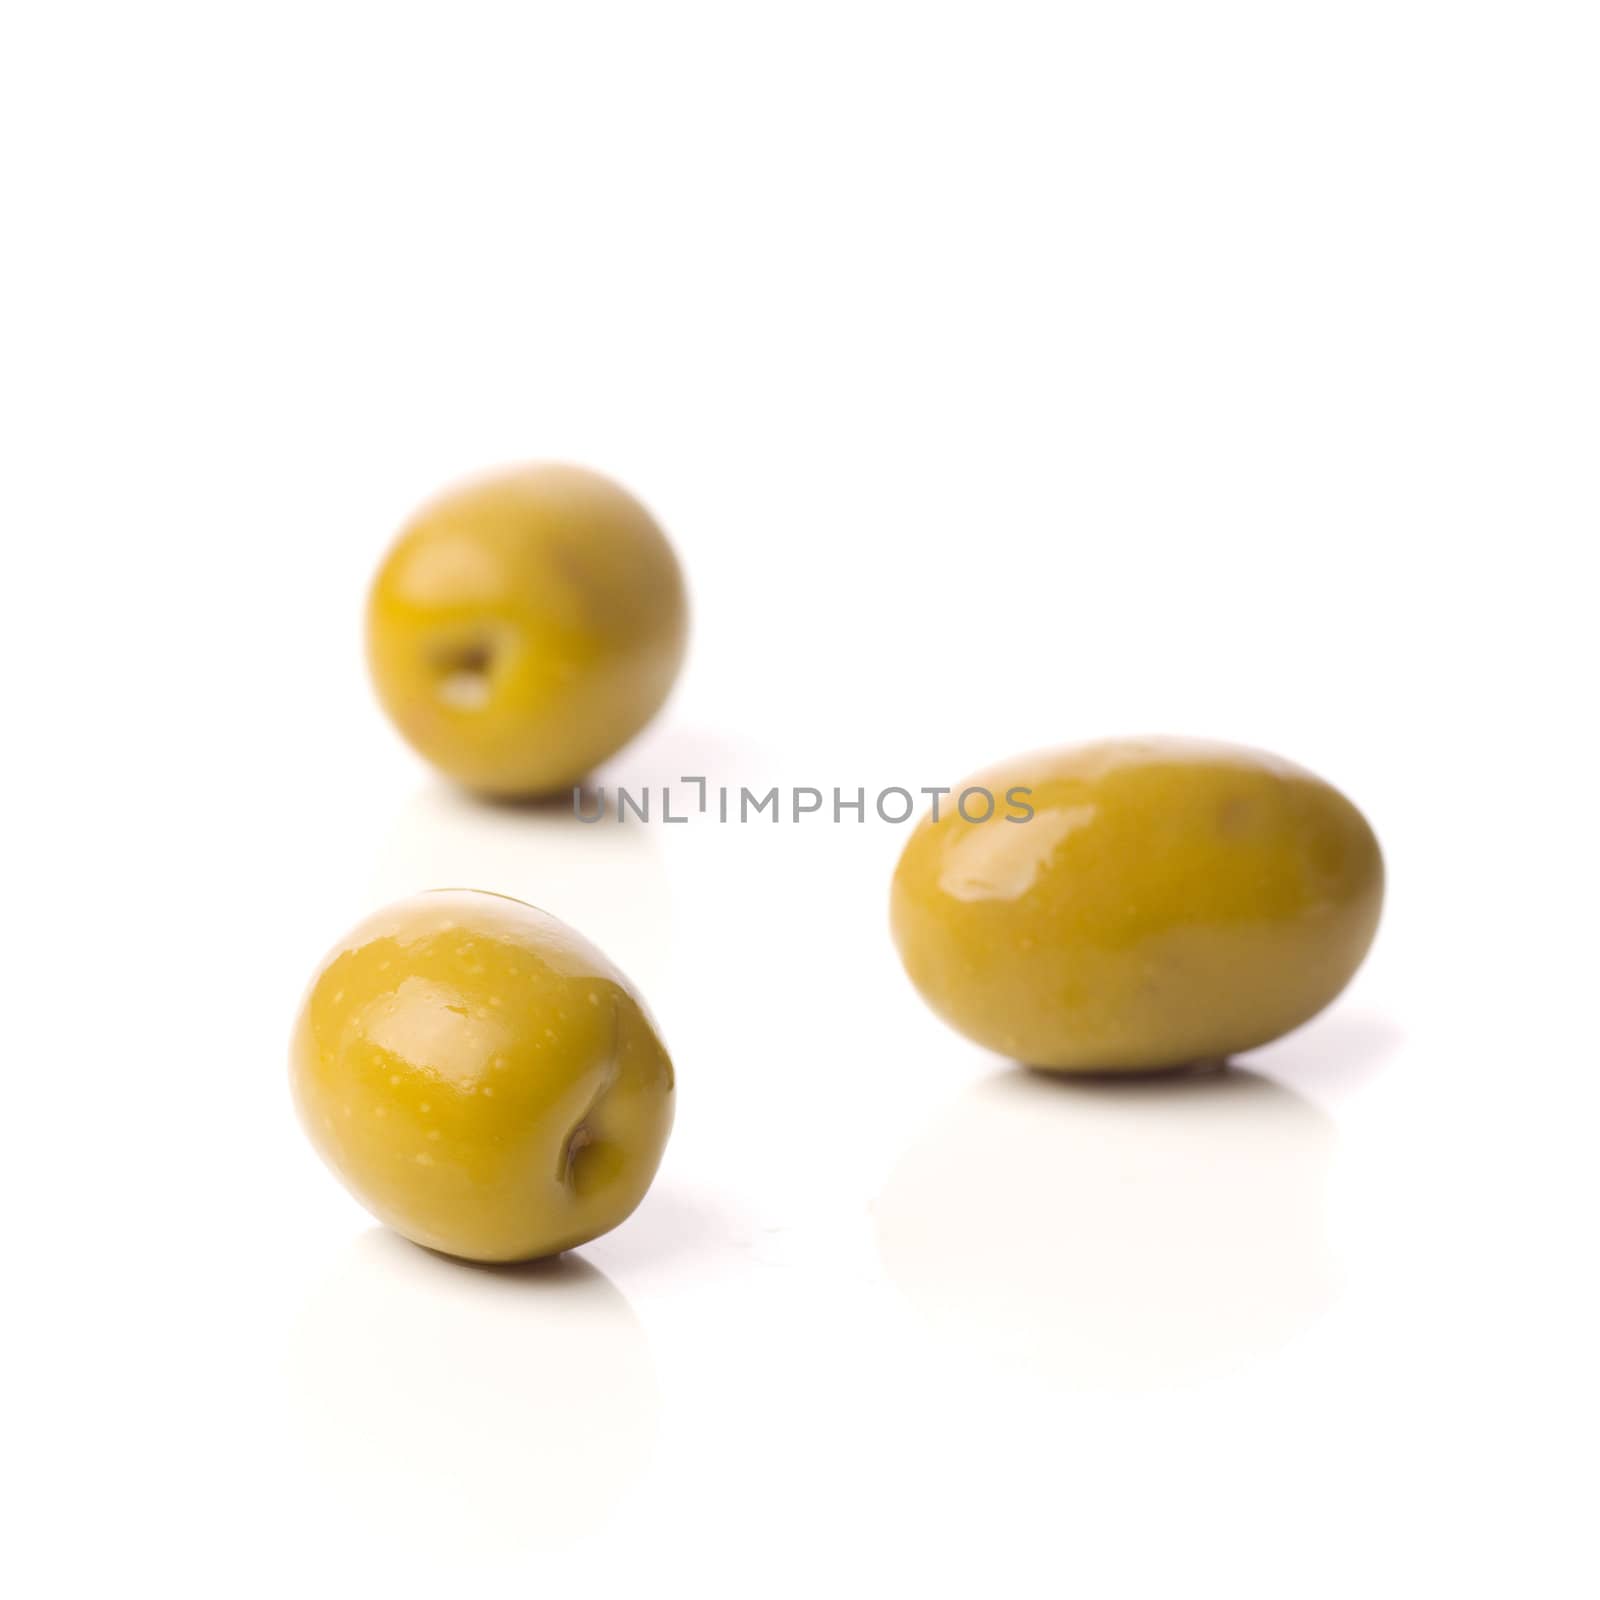 green greek olives by ctacik